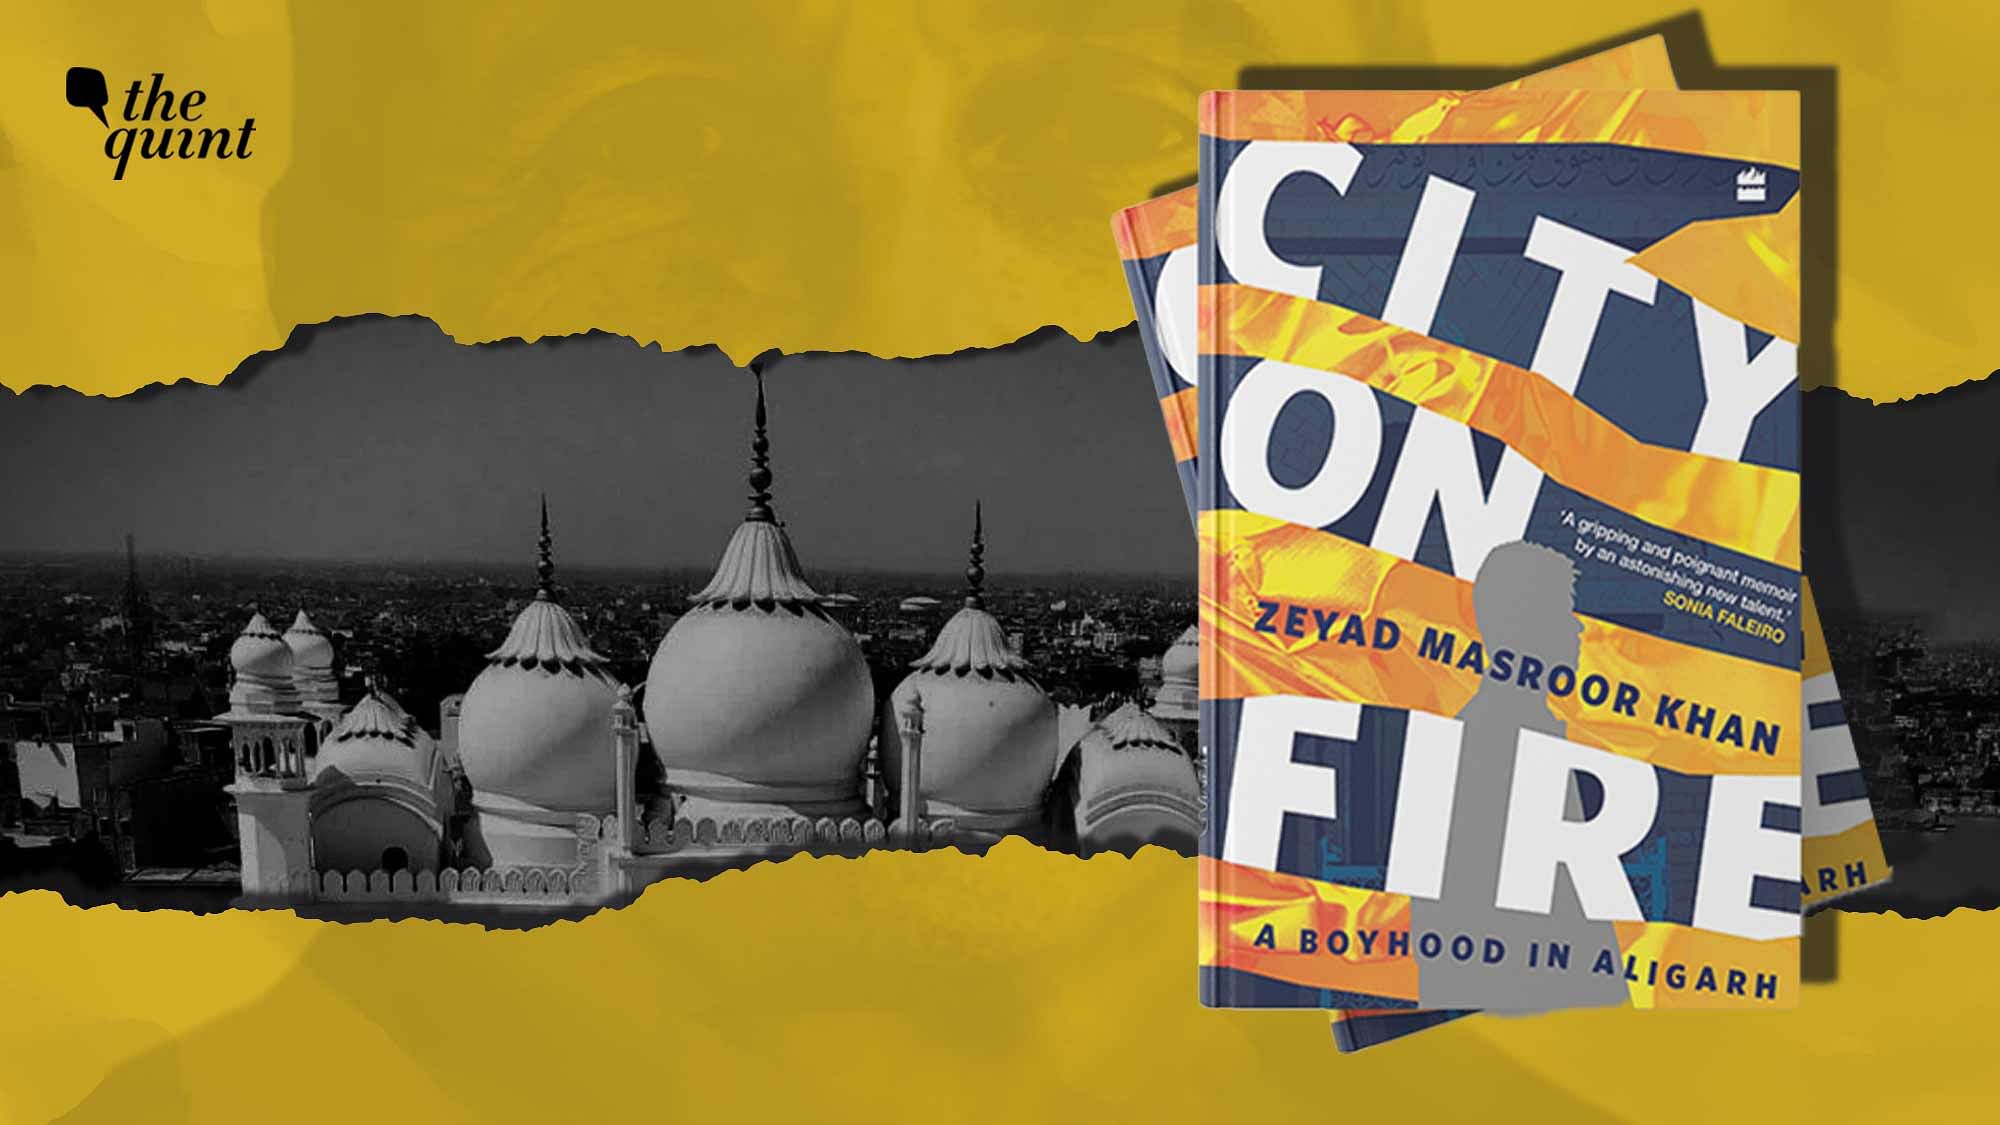 <div class="paragraphs"><p>Zeyad Masroor Khan's new book 'City on Fire: A Boyhood in Aligarh.'</p></div>